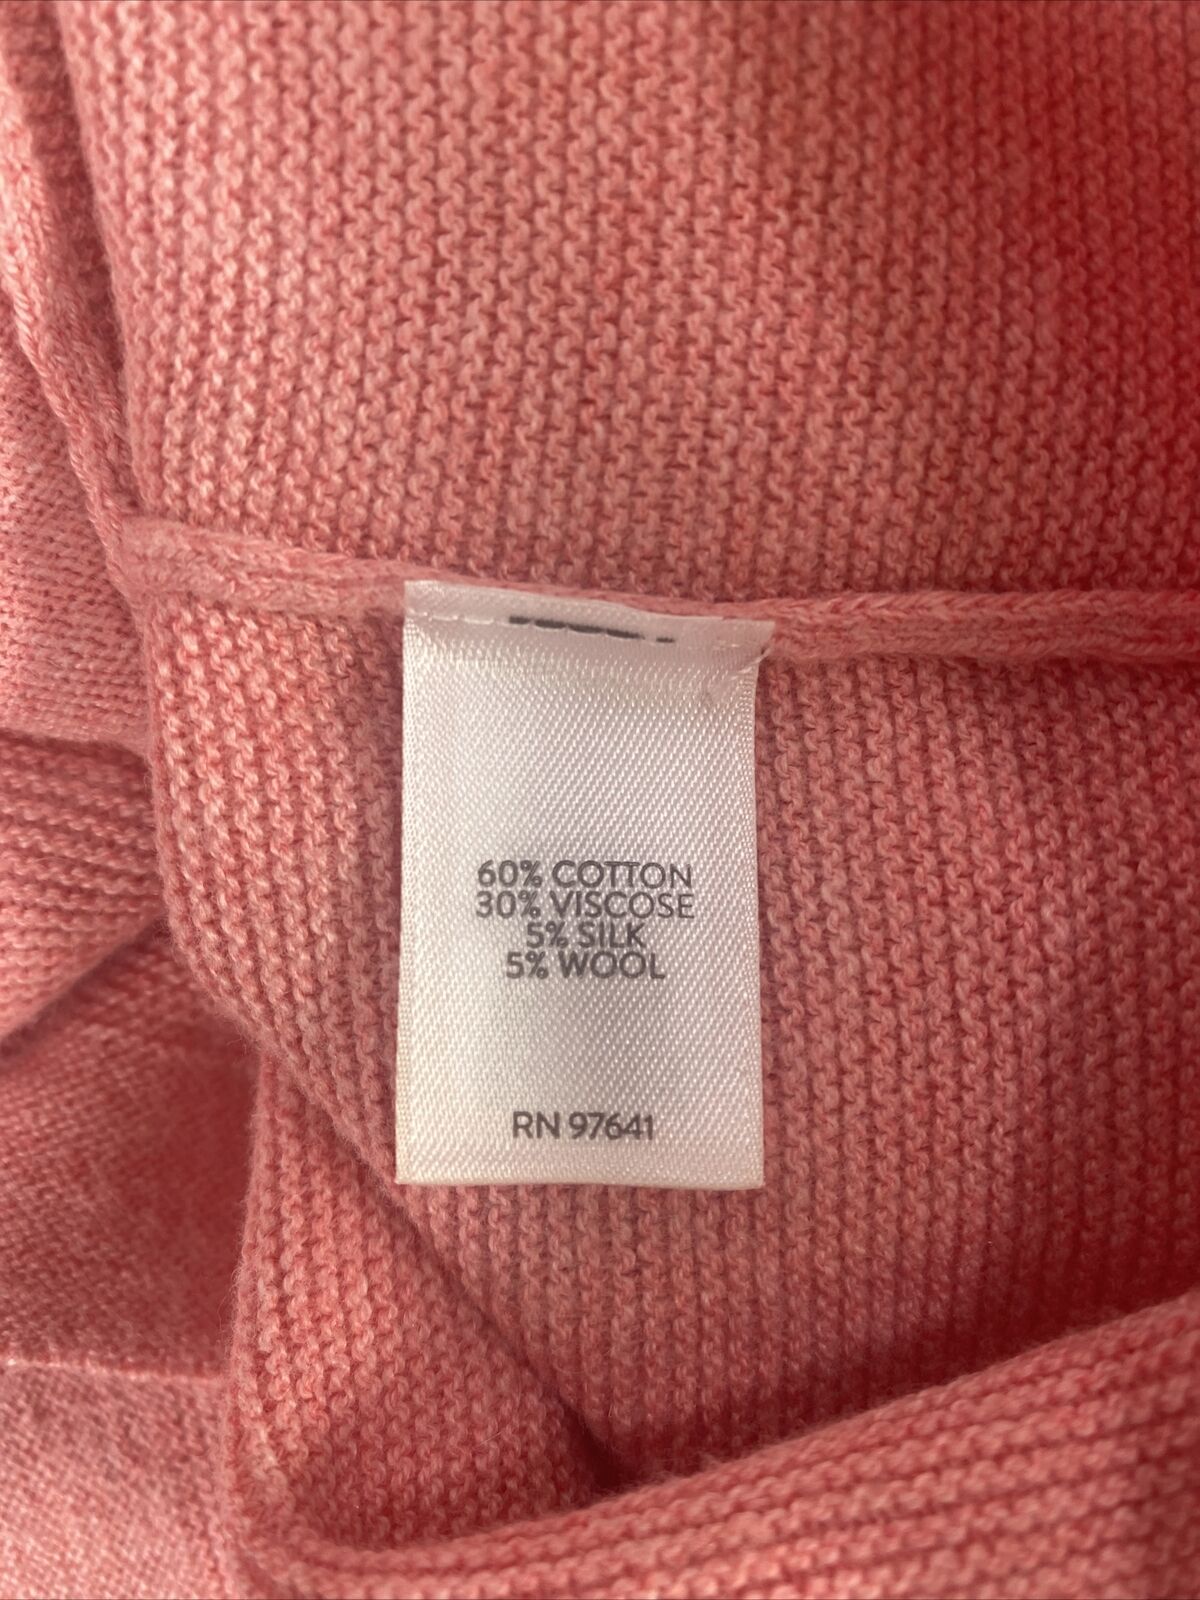 Pure J.Jill Women's Pink 1/2 Sleeve Cotton Knit Sweater Sz S